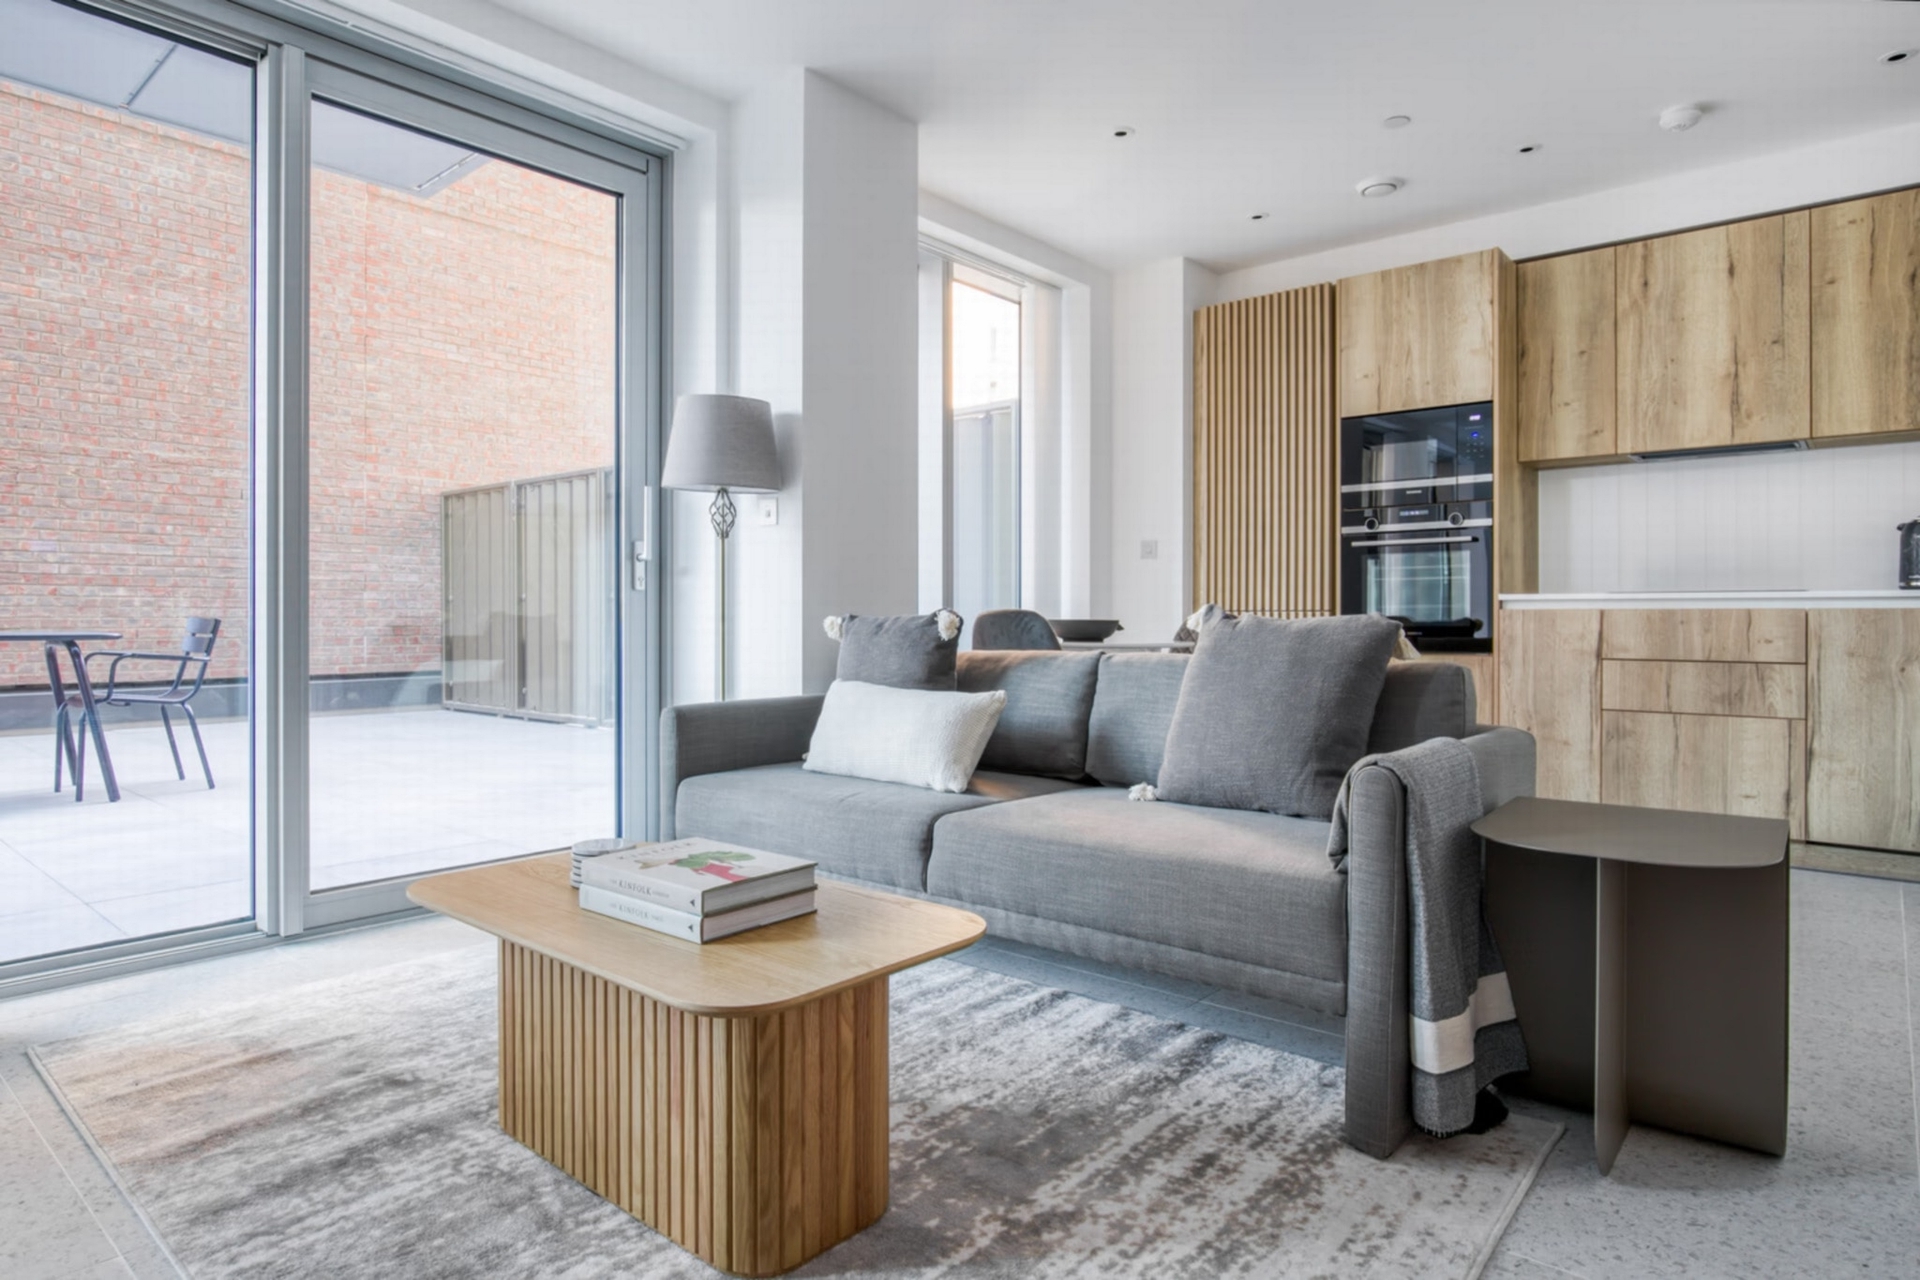 1 Bedroom Apartment to rent in Whitechapel, London, E1